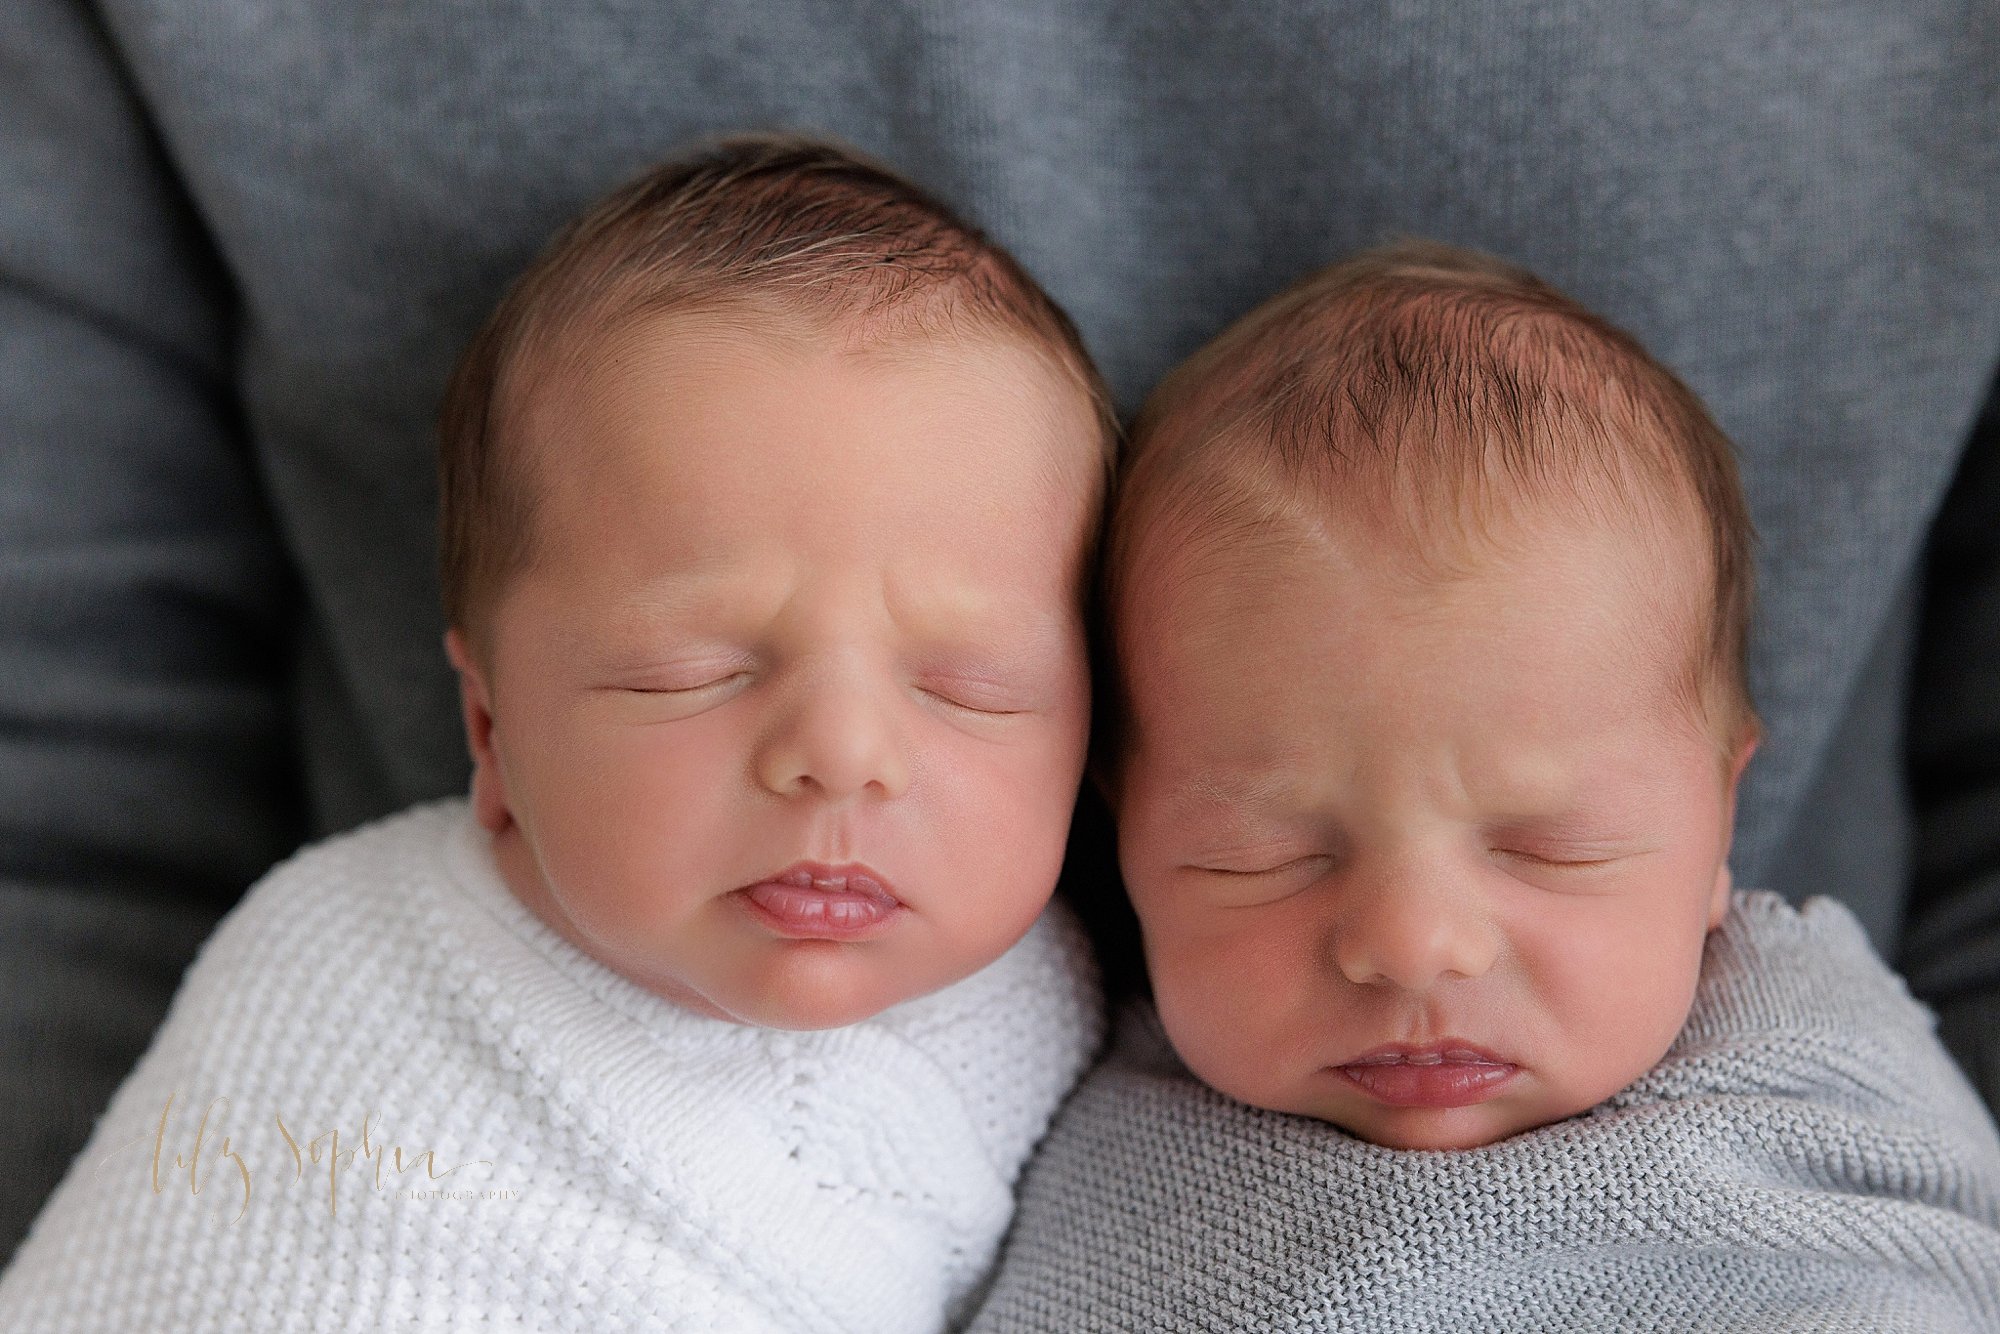 intown-atlanta-morningside-decatur-brookhaven-buckhead-studio-natural-light-newborn-baby-boy-twins-family-photoshoot_5932.jpg